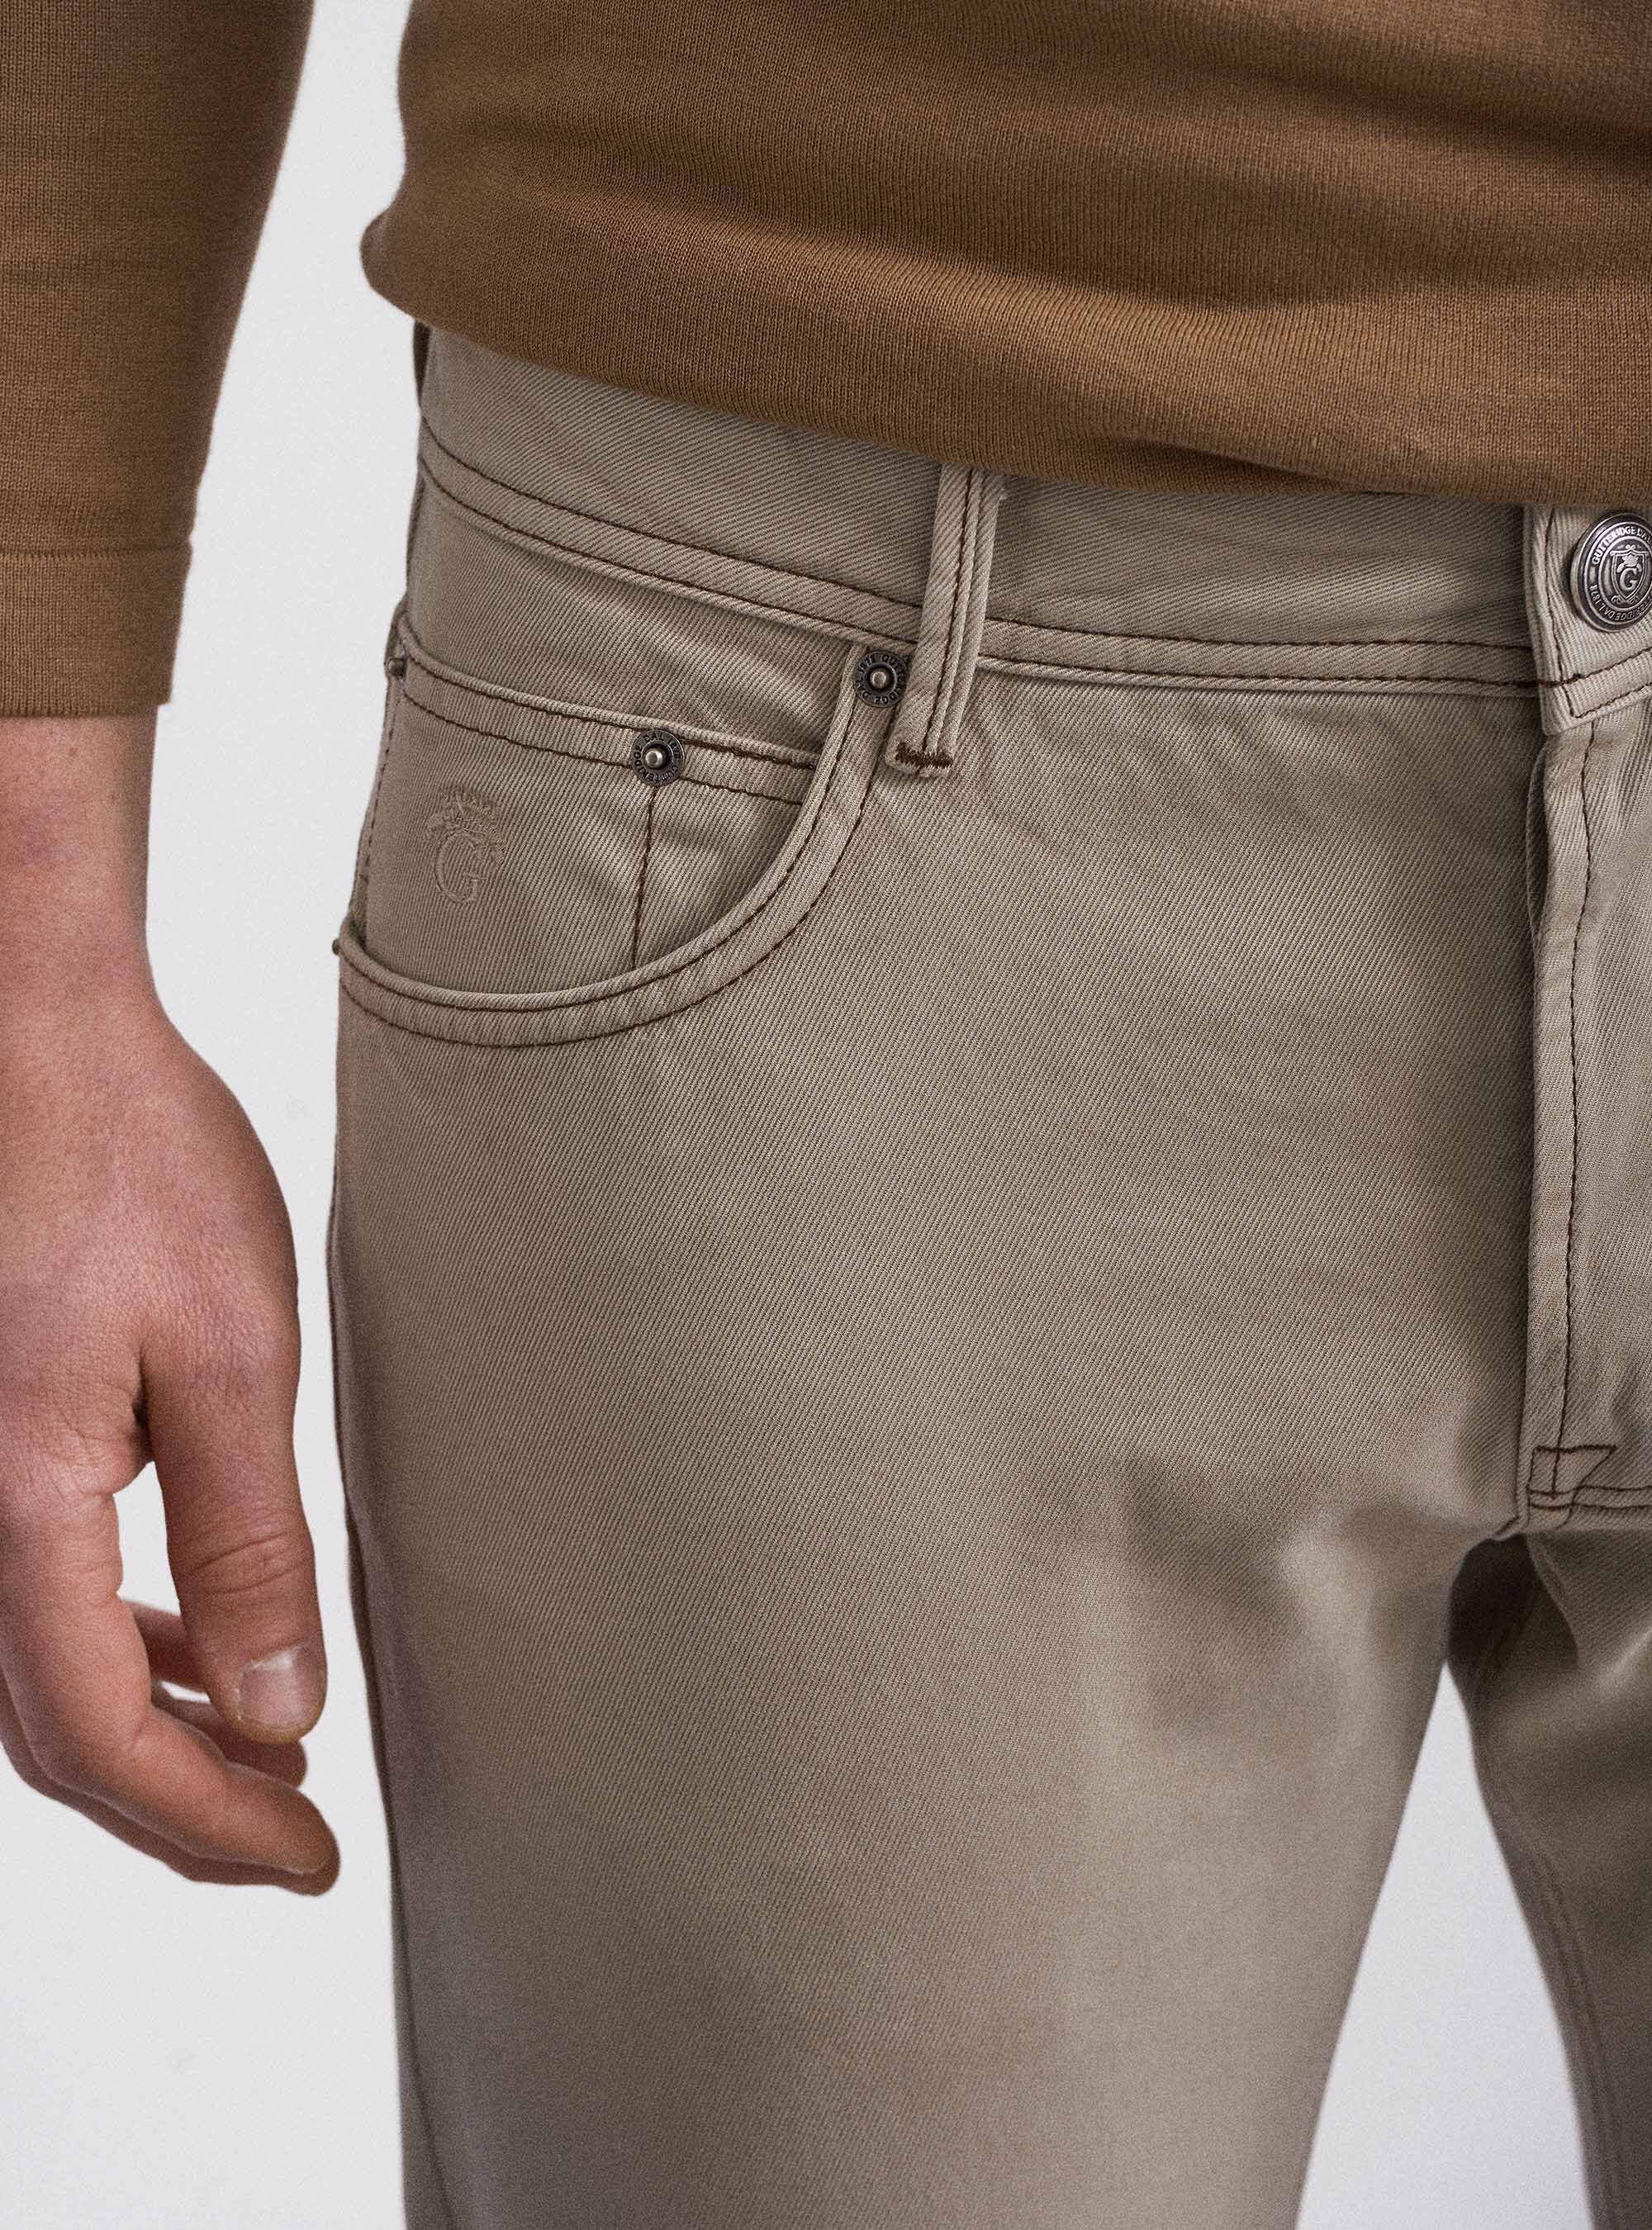 Buy Dakomoda Toddler Boys Cotton Pants Gray FivePocket Stretch Jeans  Adjustable Waist 2T at Amazonin